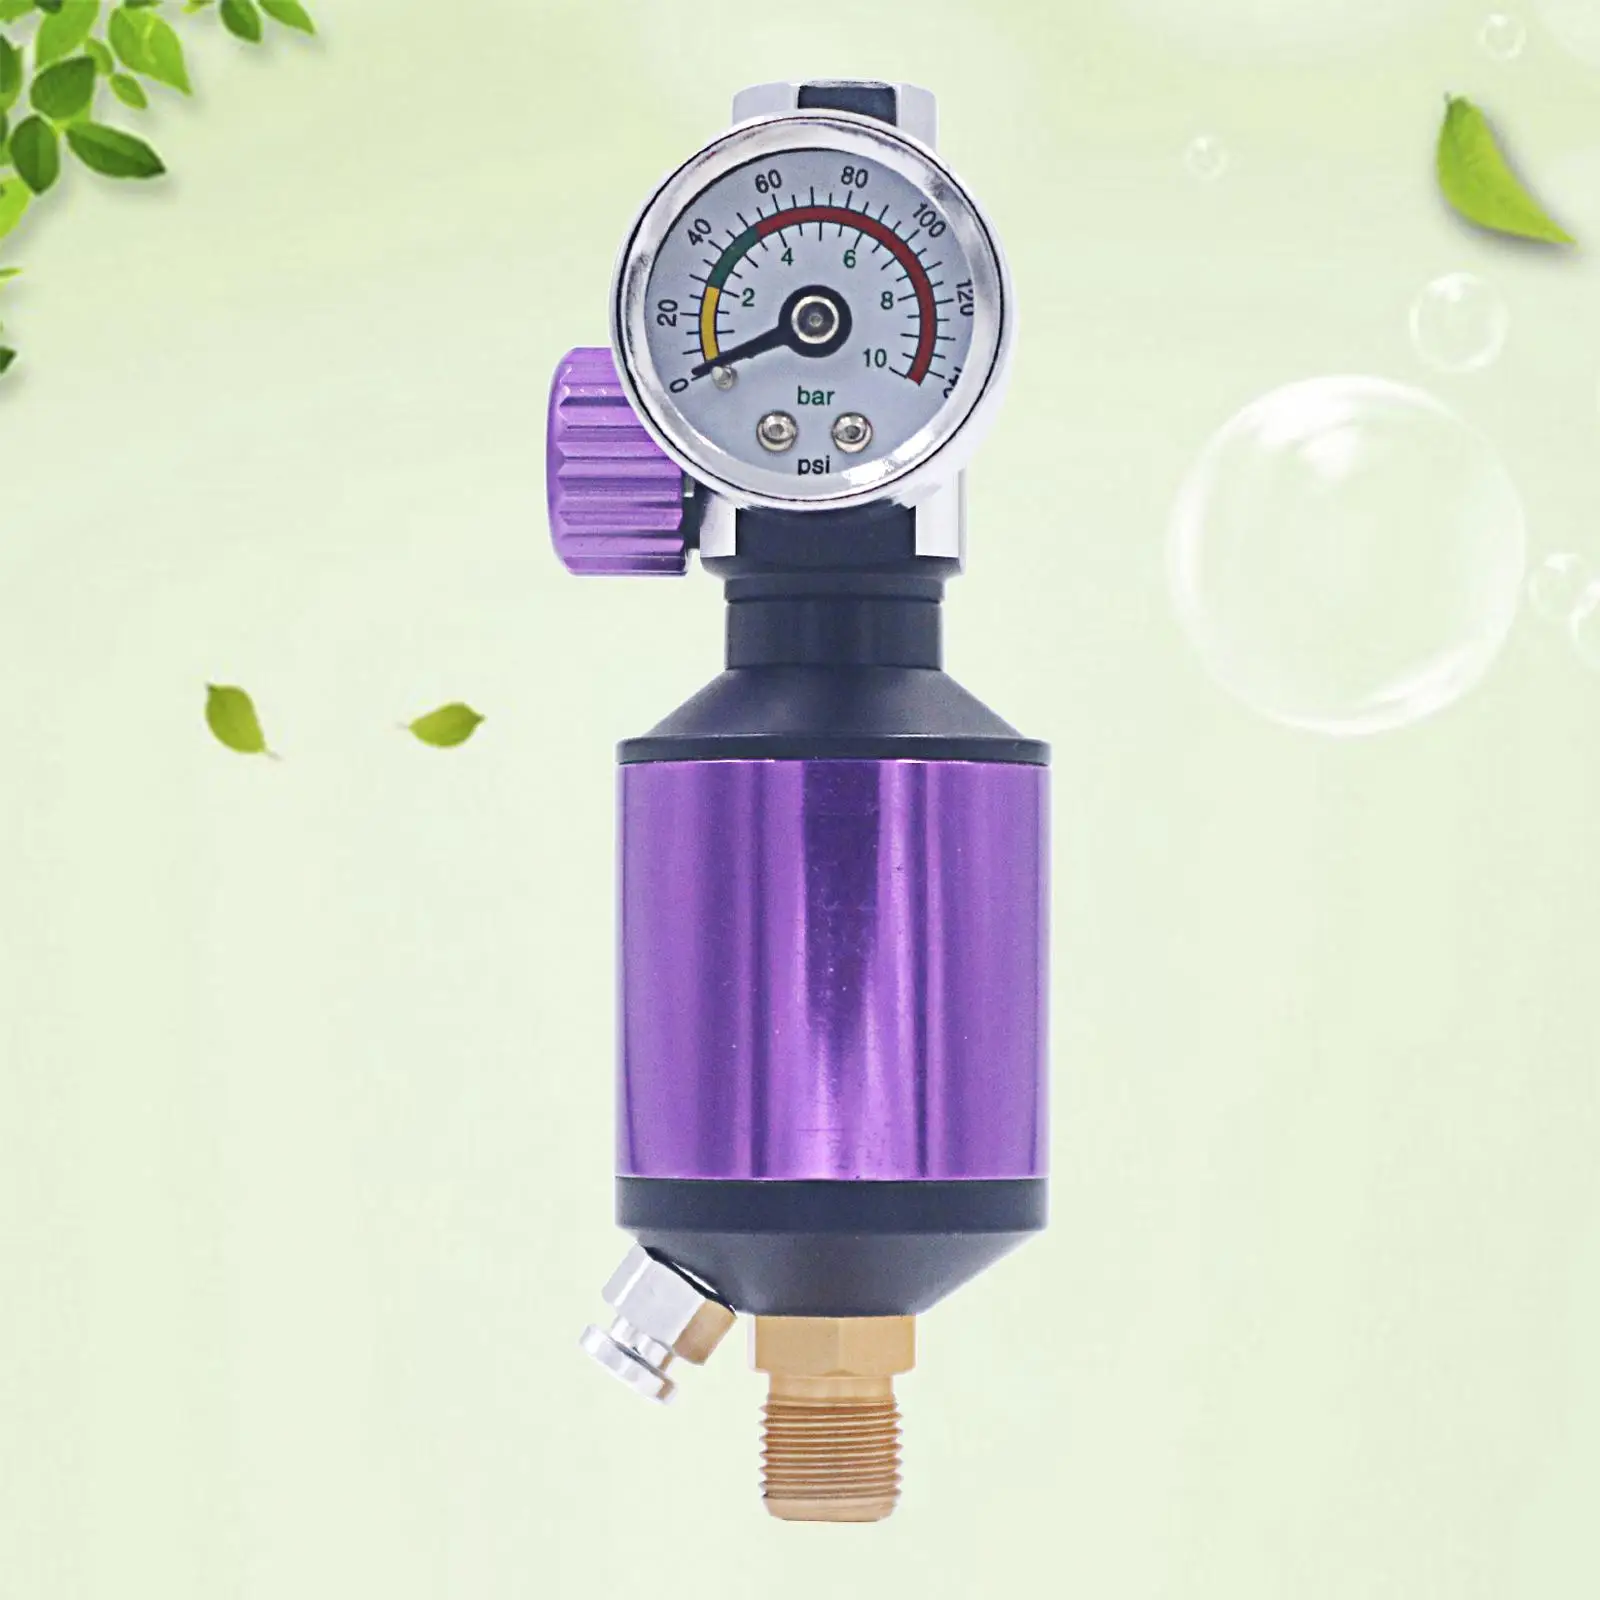 Paint Spray Gun Air Preure Regulator Gauge with Air Filter Kit Oil Water Separator